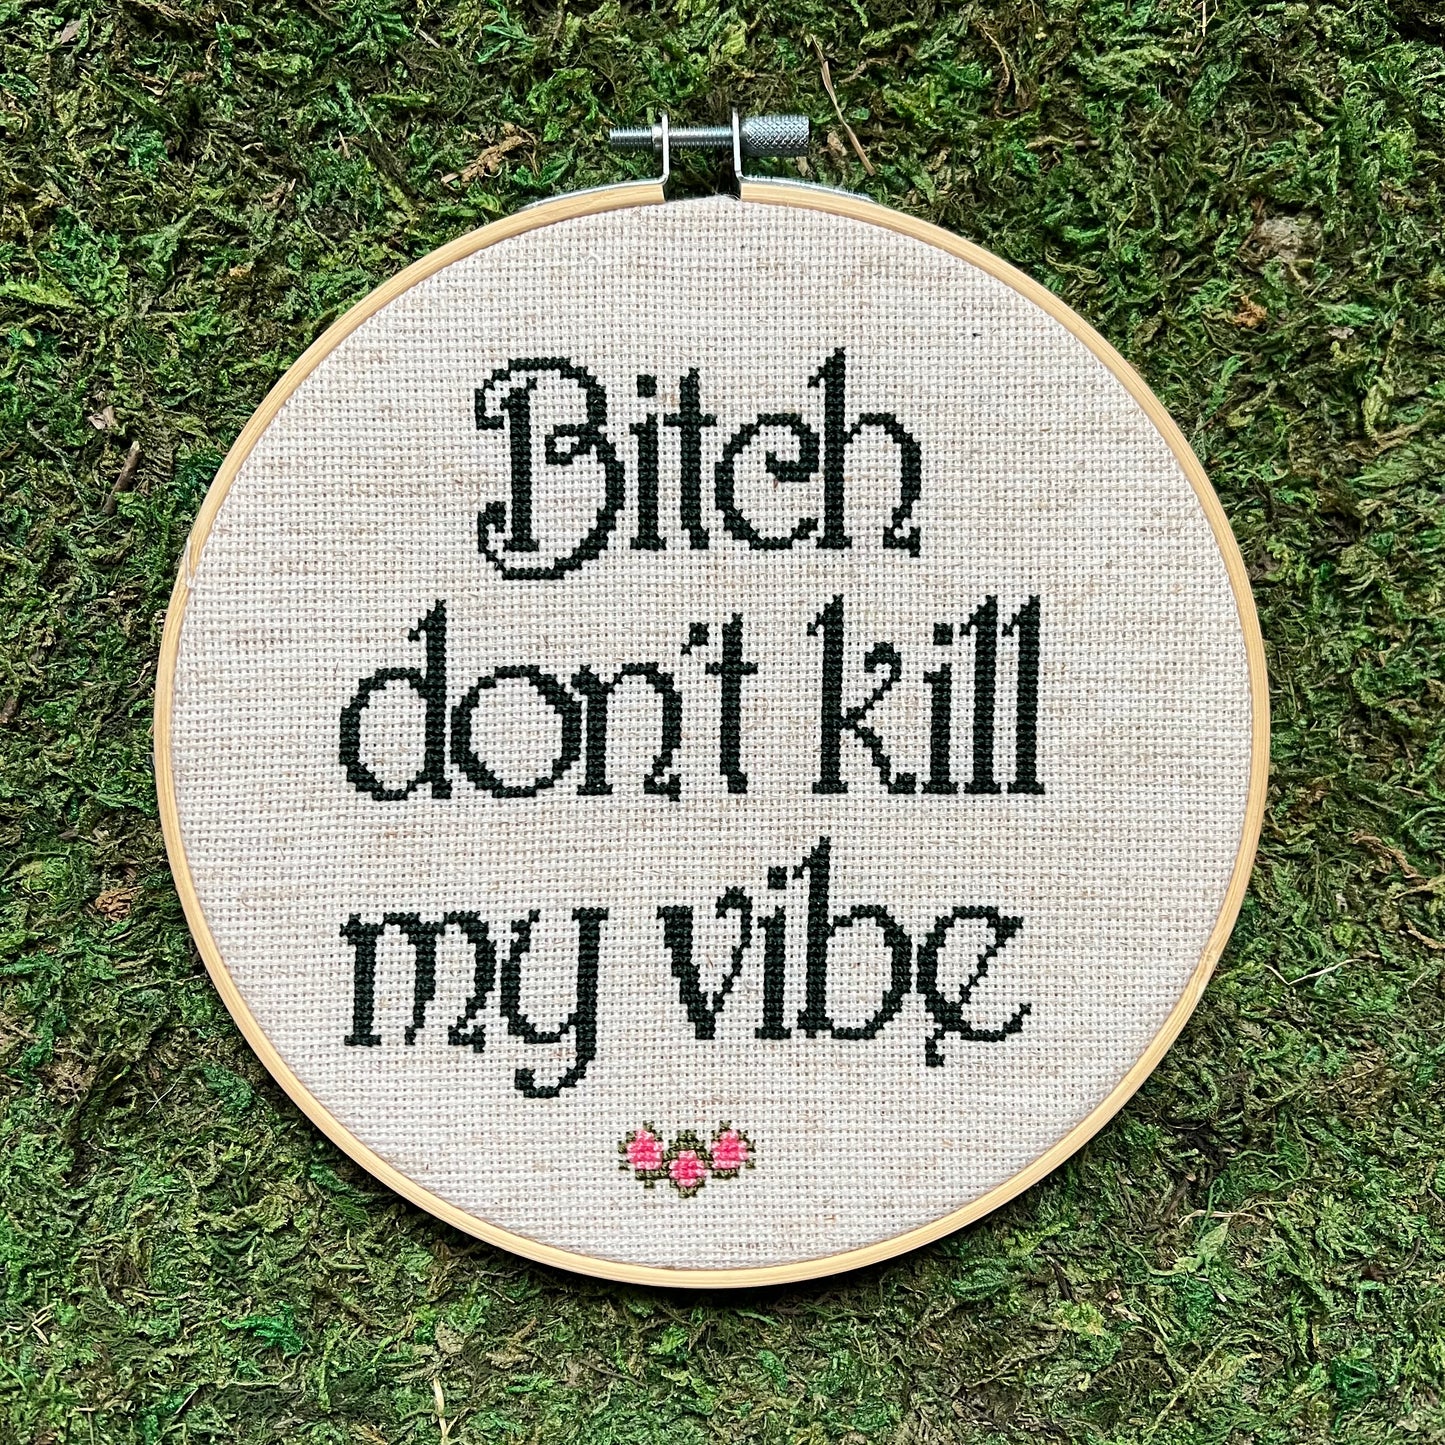 Bitch Don't Kill My Vibe 7” Stitched by Hand Cross Stitch Hoop